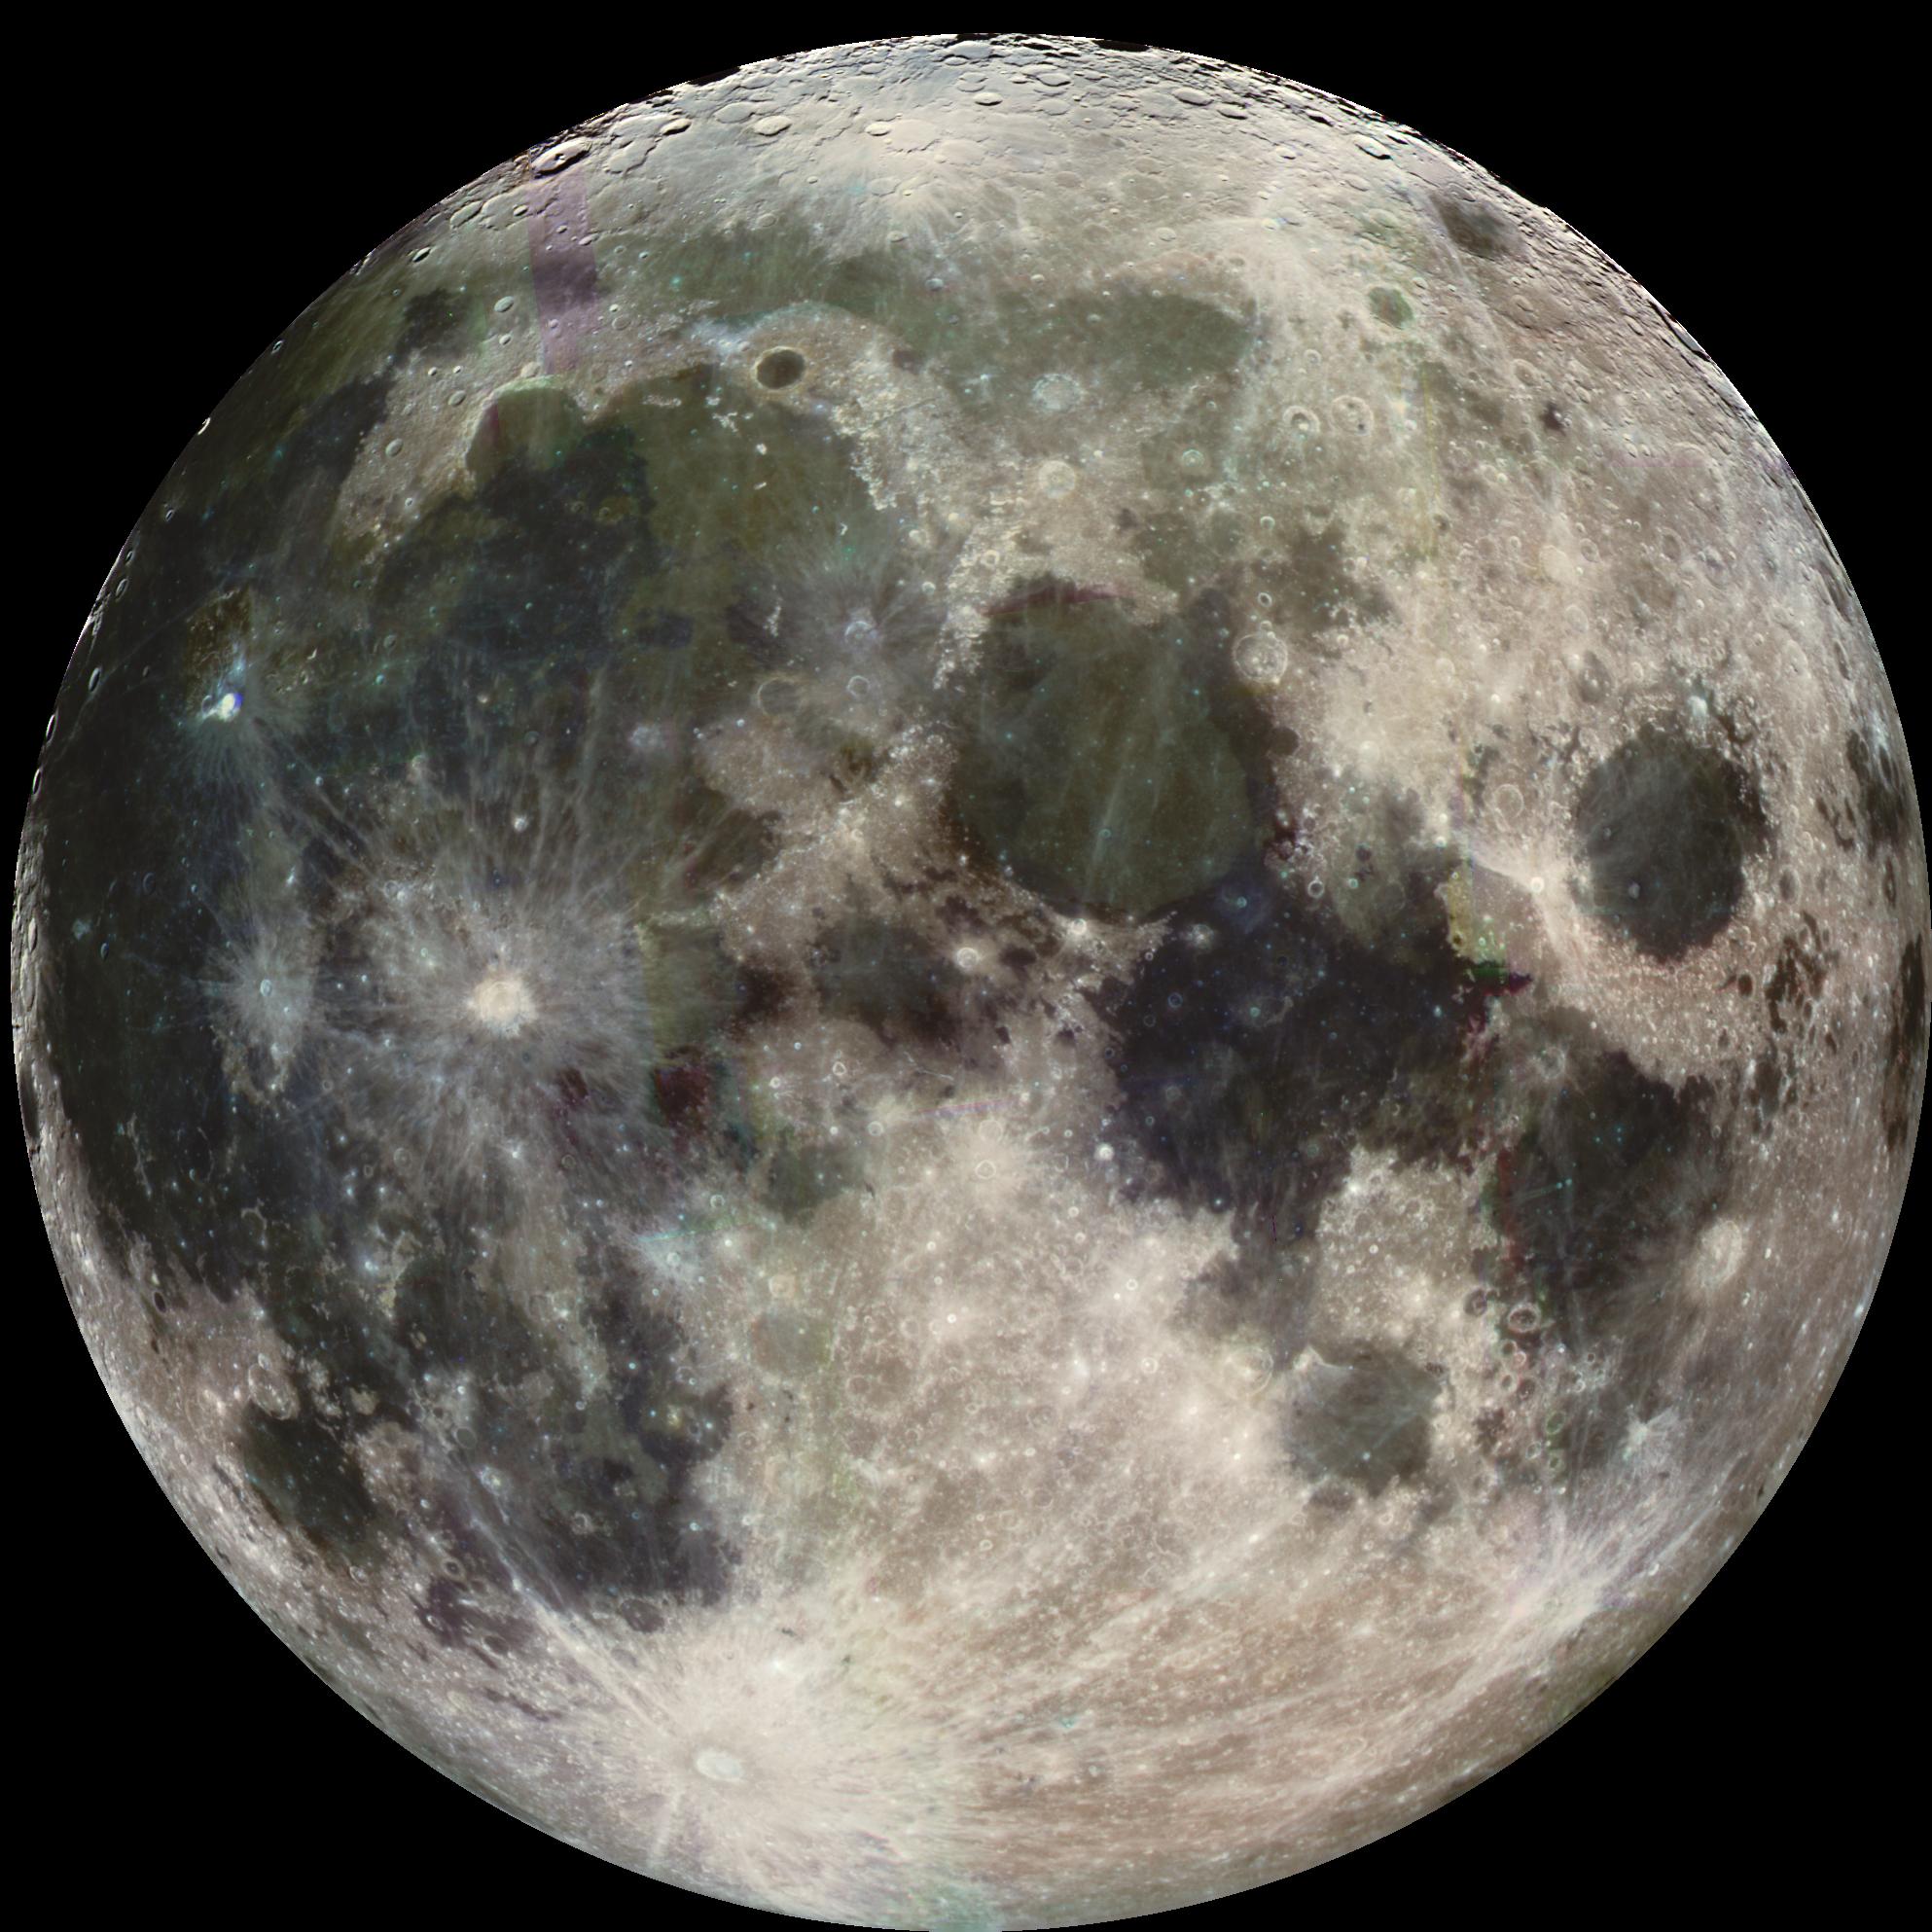 File:Full moon.jpeg - Wikimedia Commons